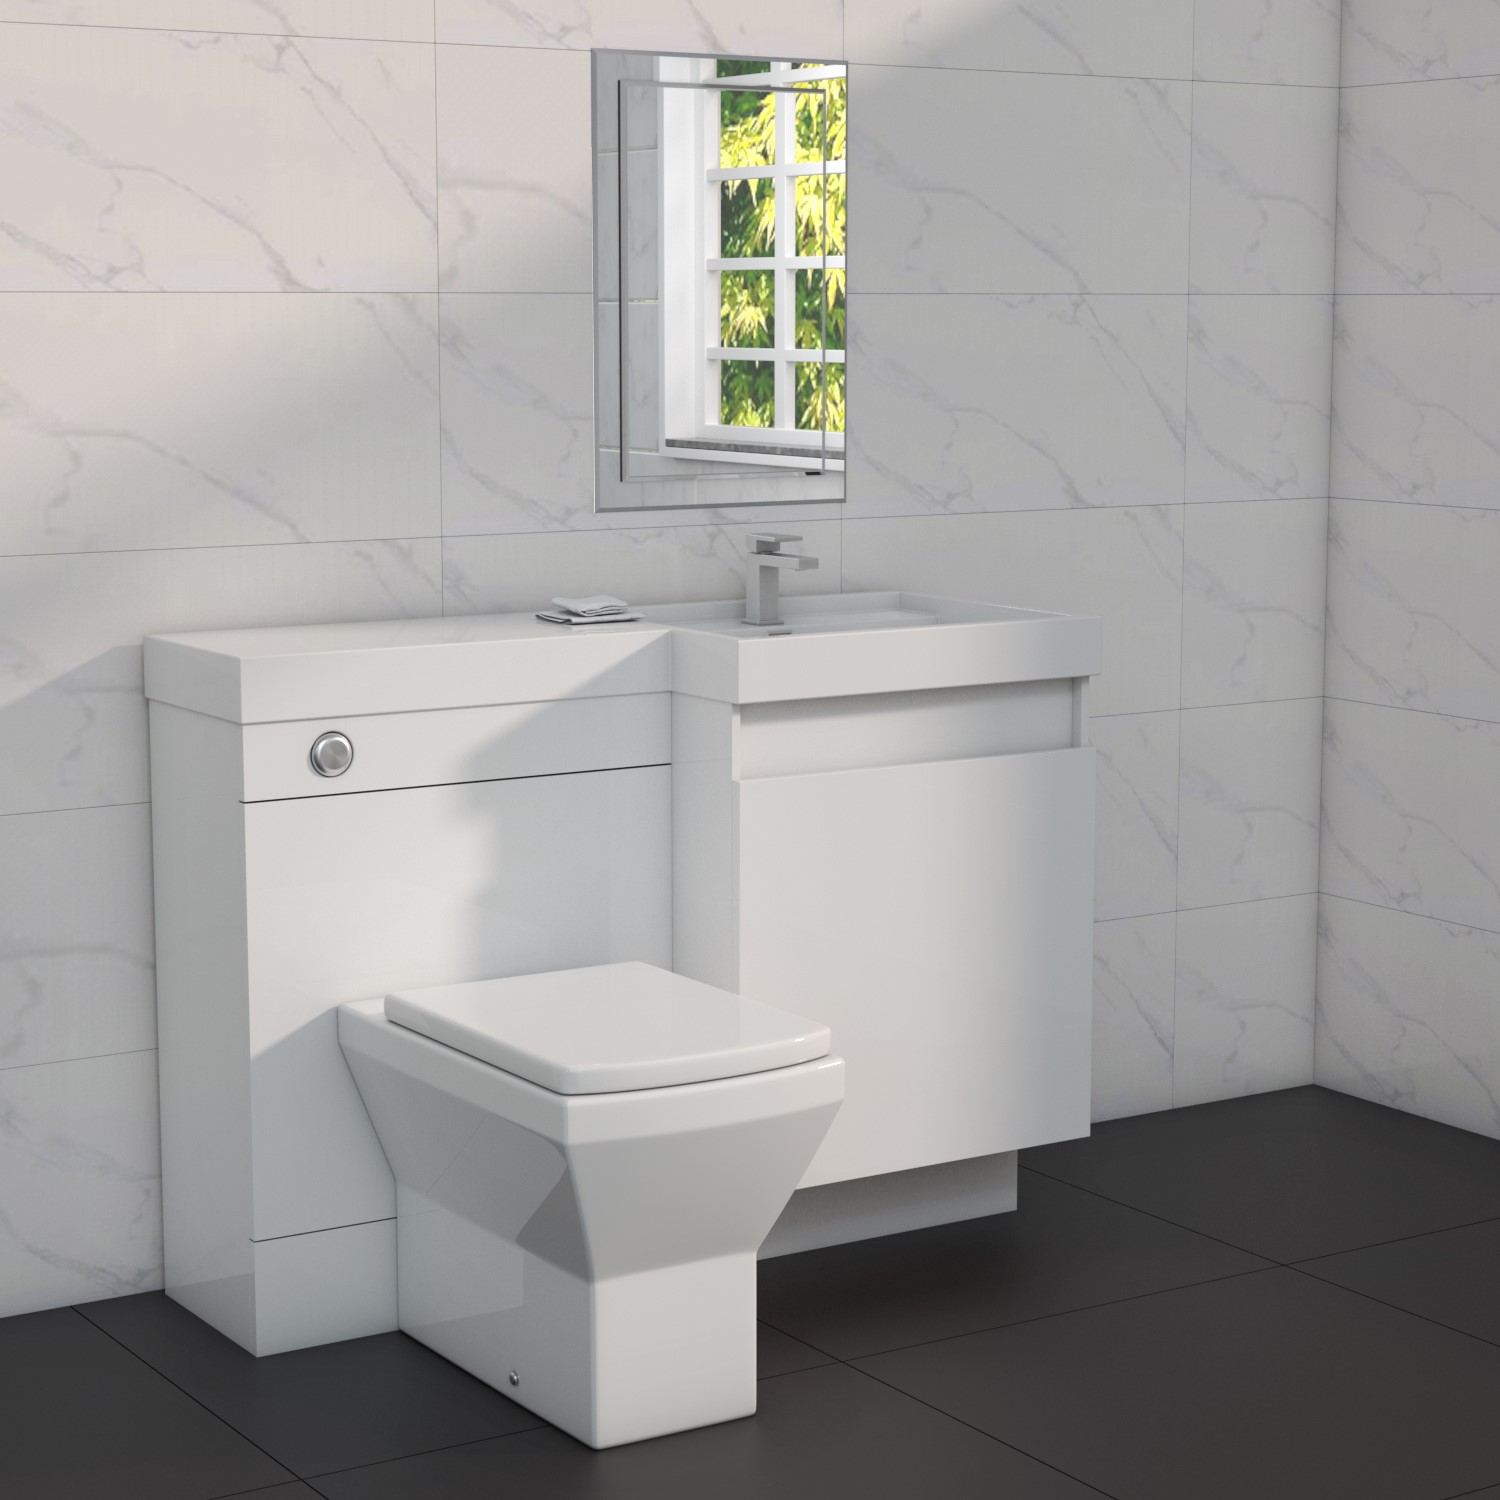 Combination Vanity Units For Bathrooms - Bali Matt White Toilet And